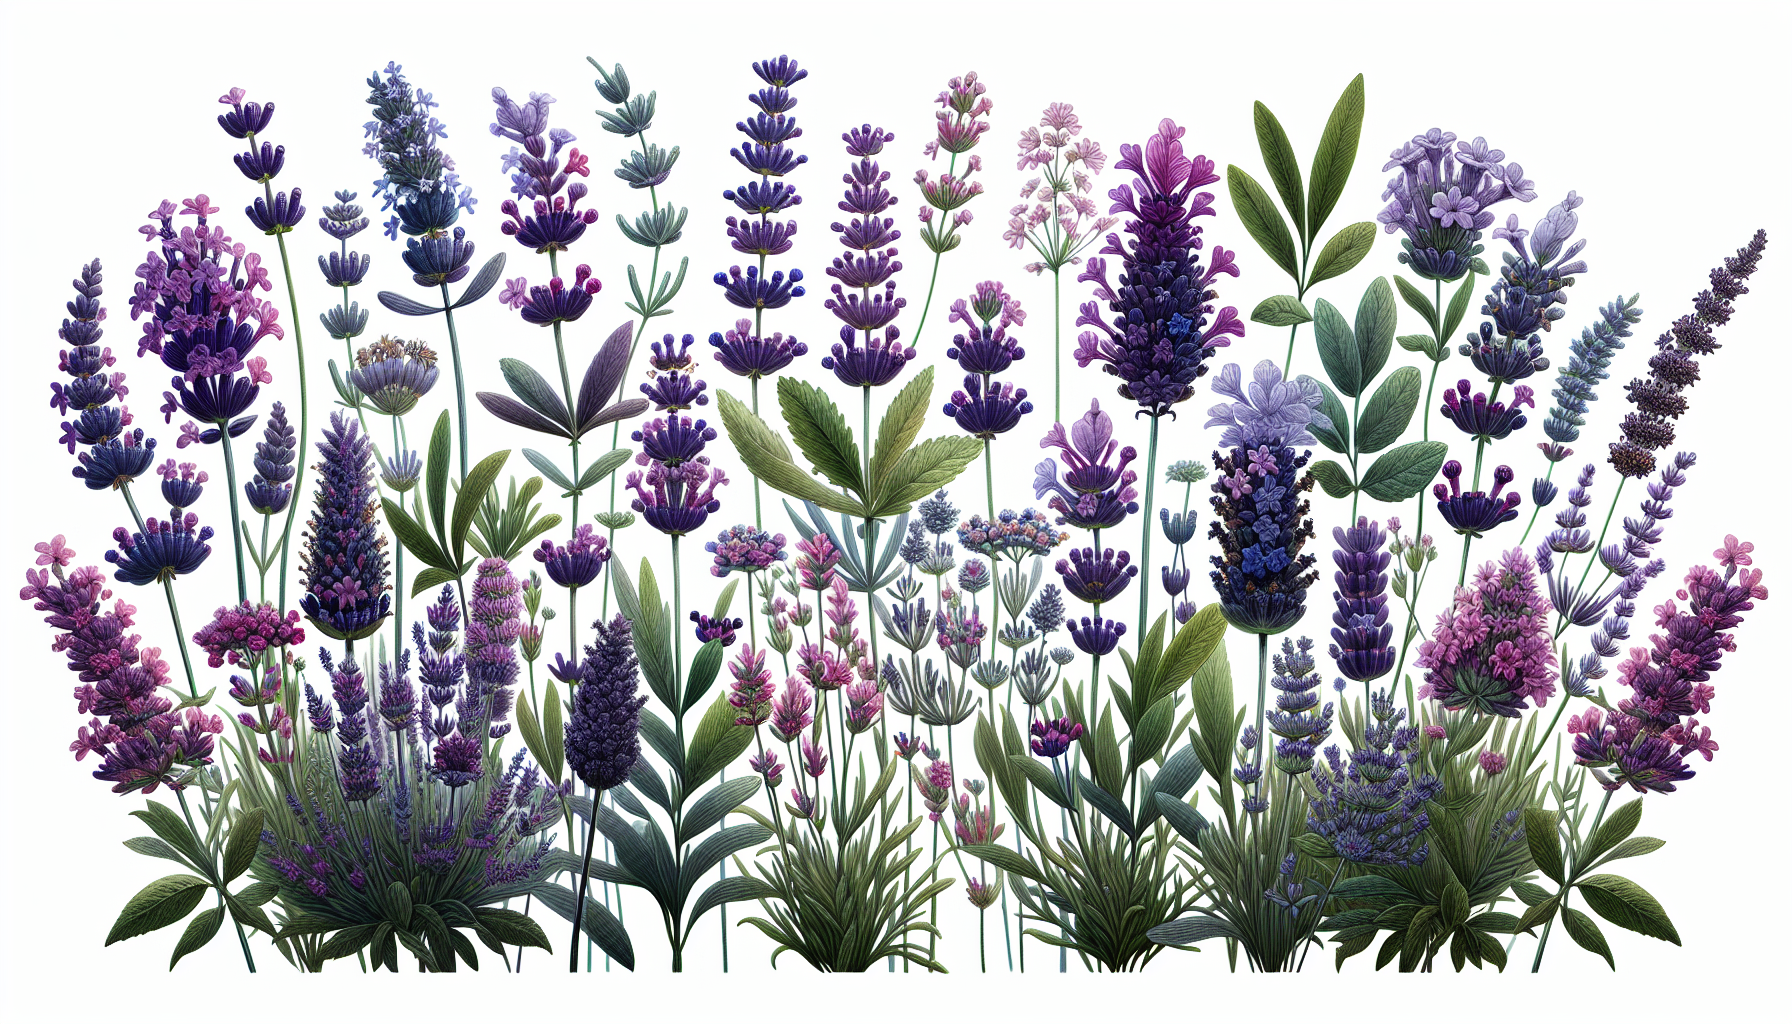 Illustration of various lavender plant species